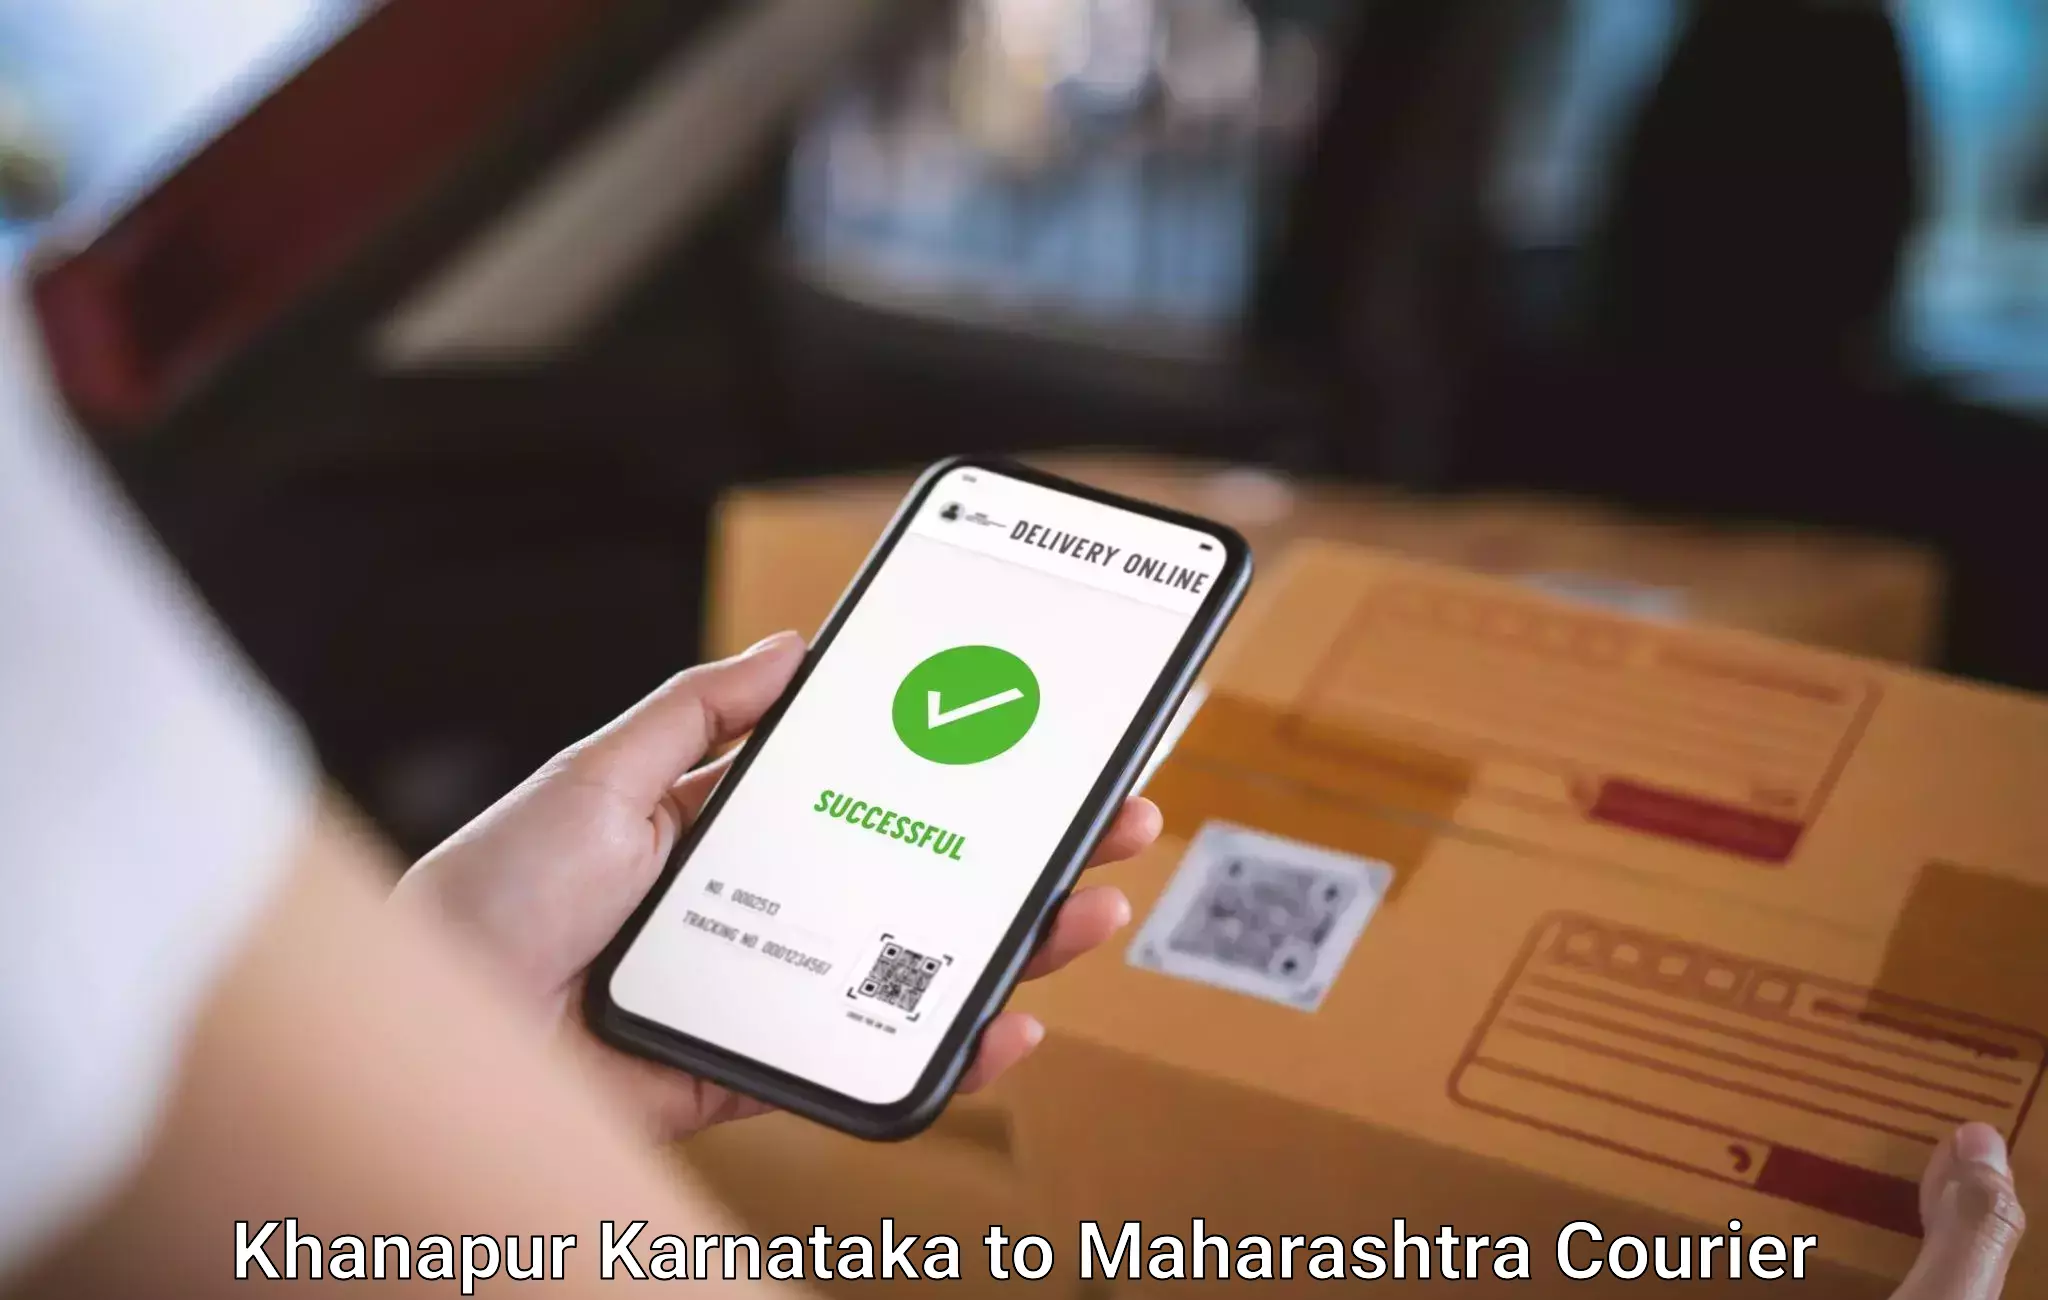 Baggage shipping advice Khanapur Karnataka to Vairag